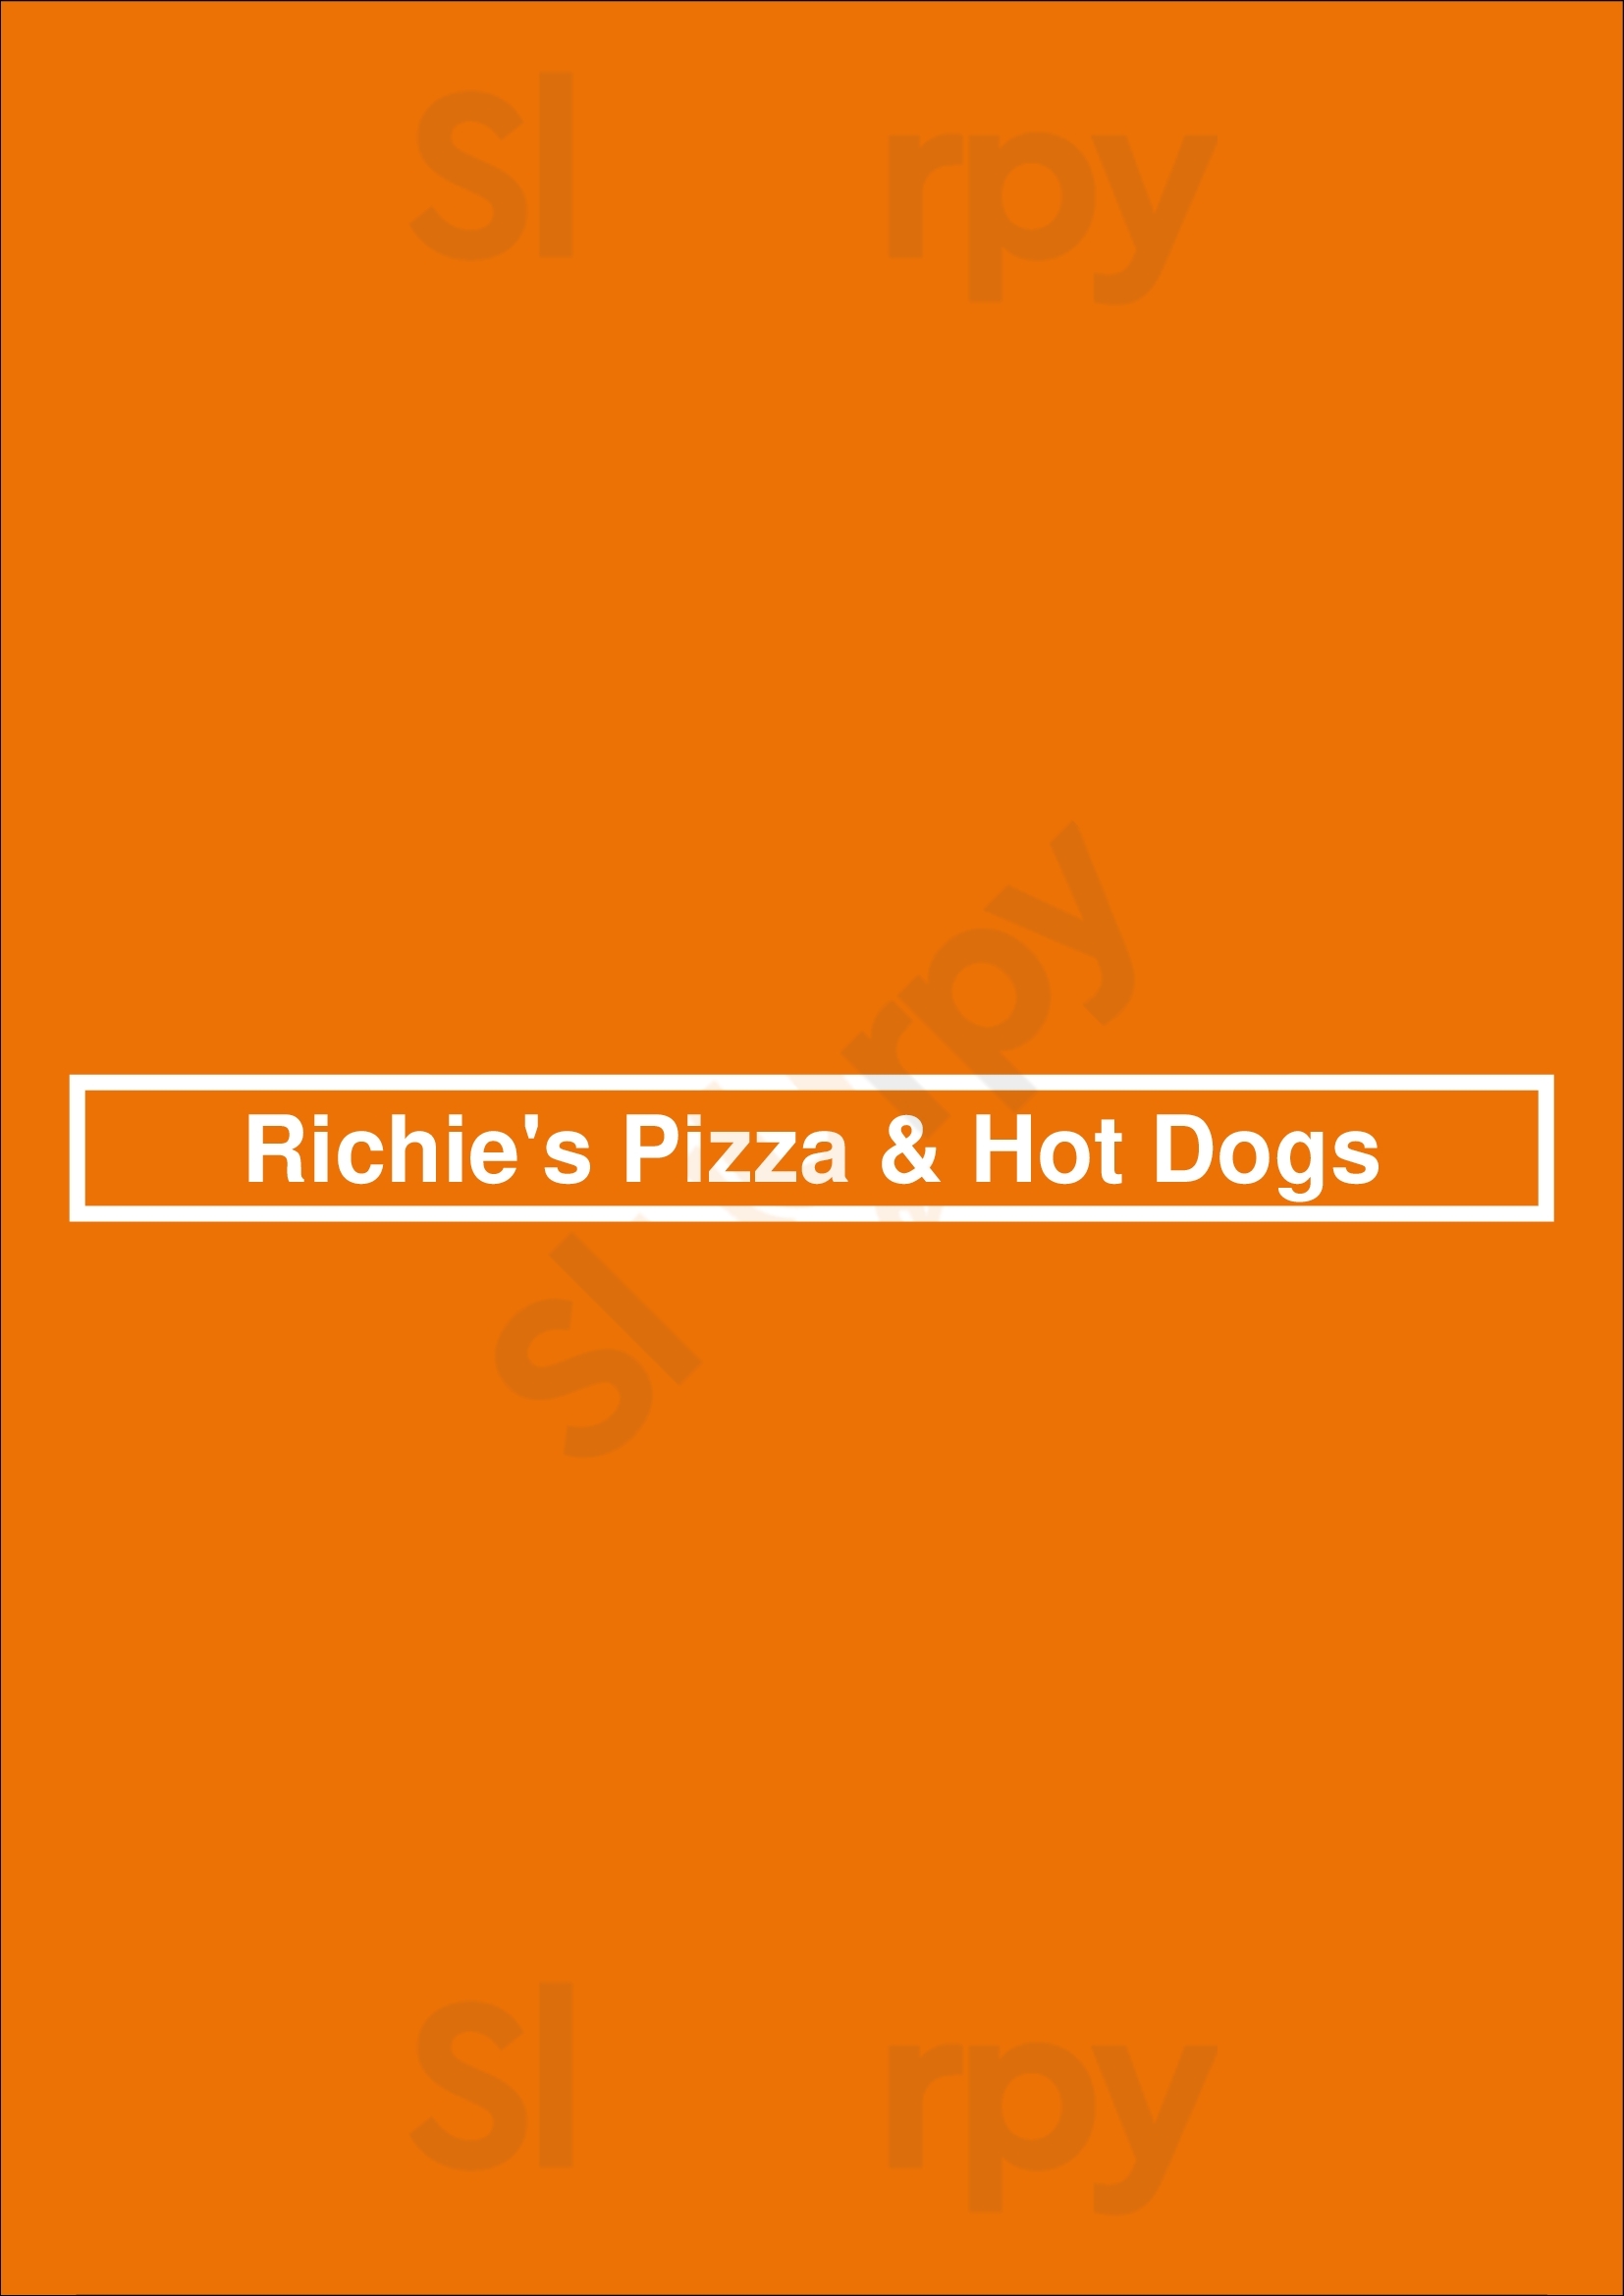 Richie's Pizza & Hot Dogs Fresno Menu - 1